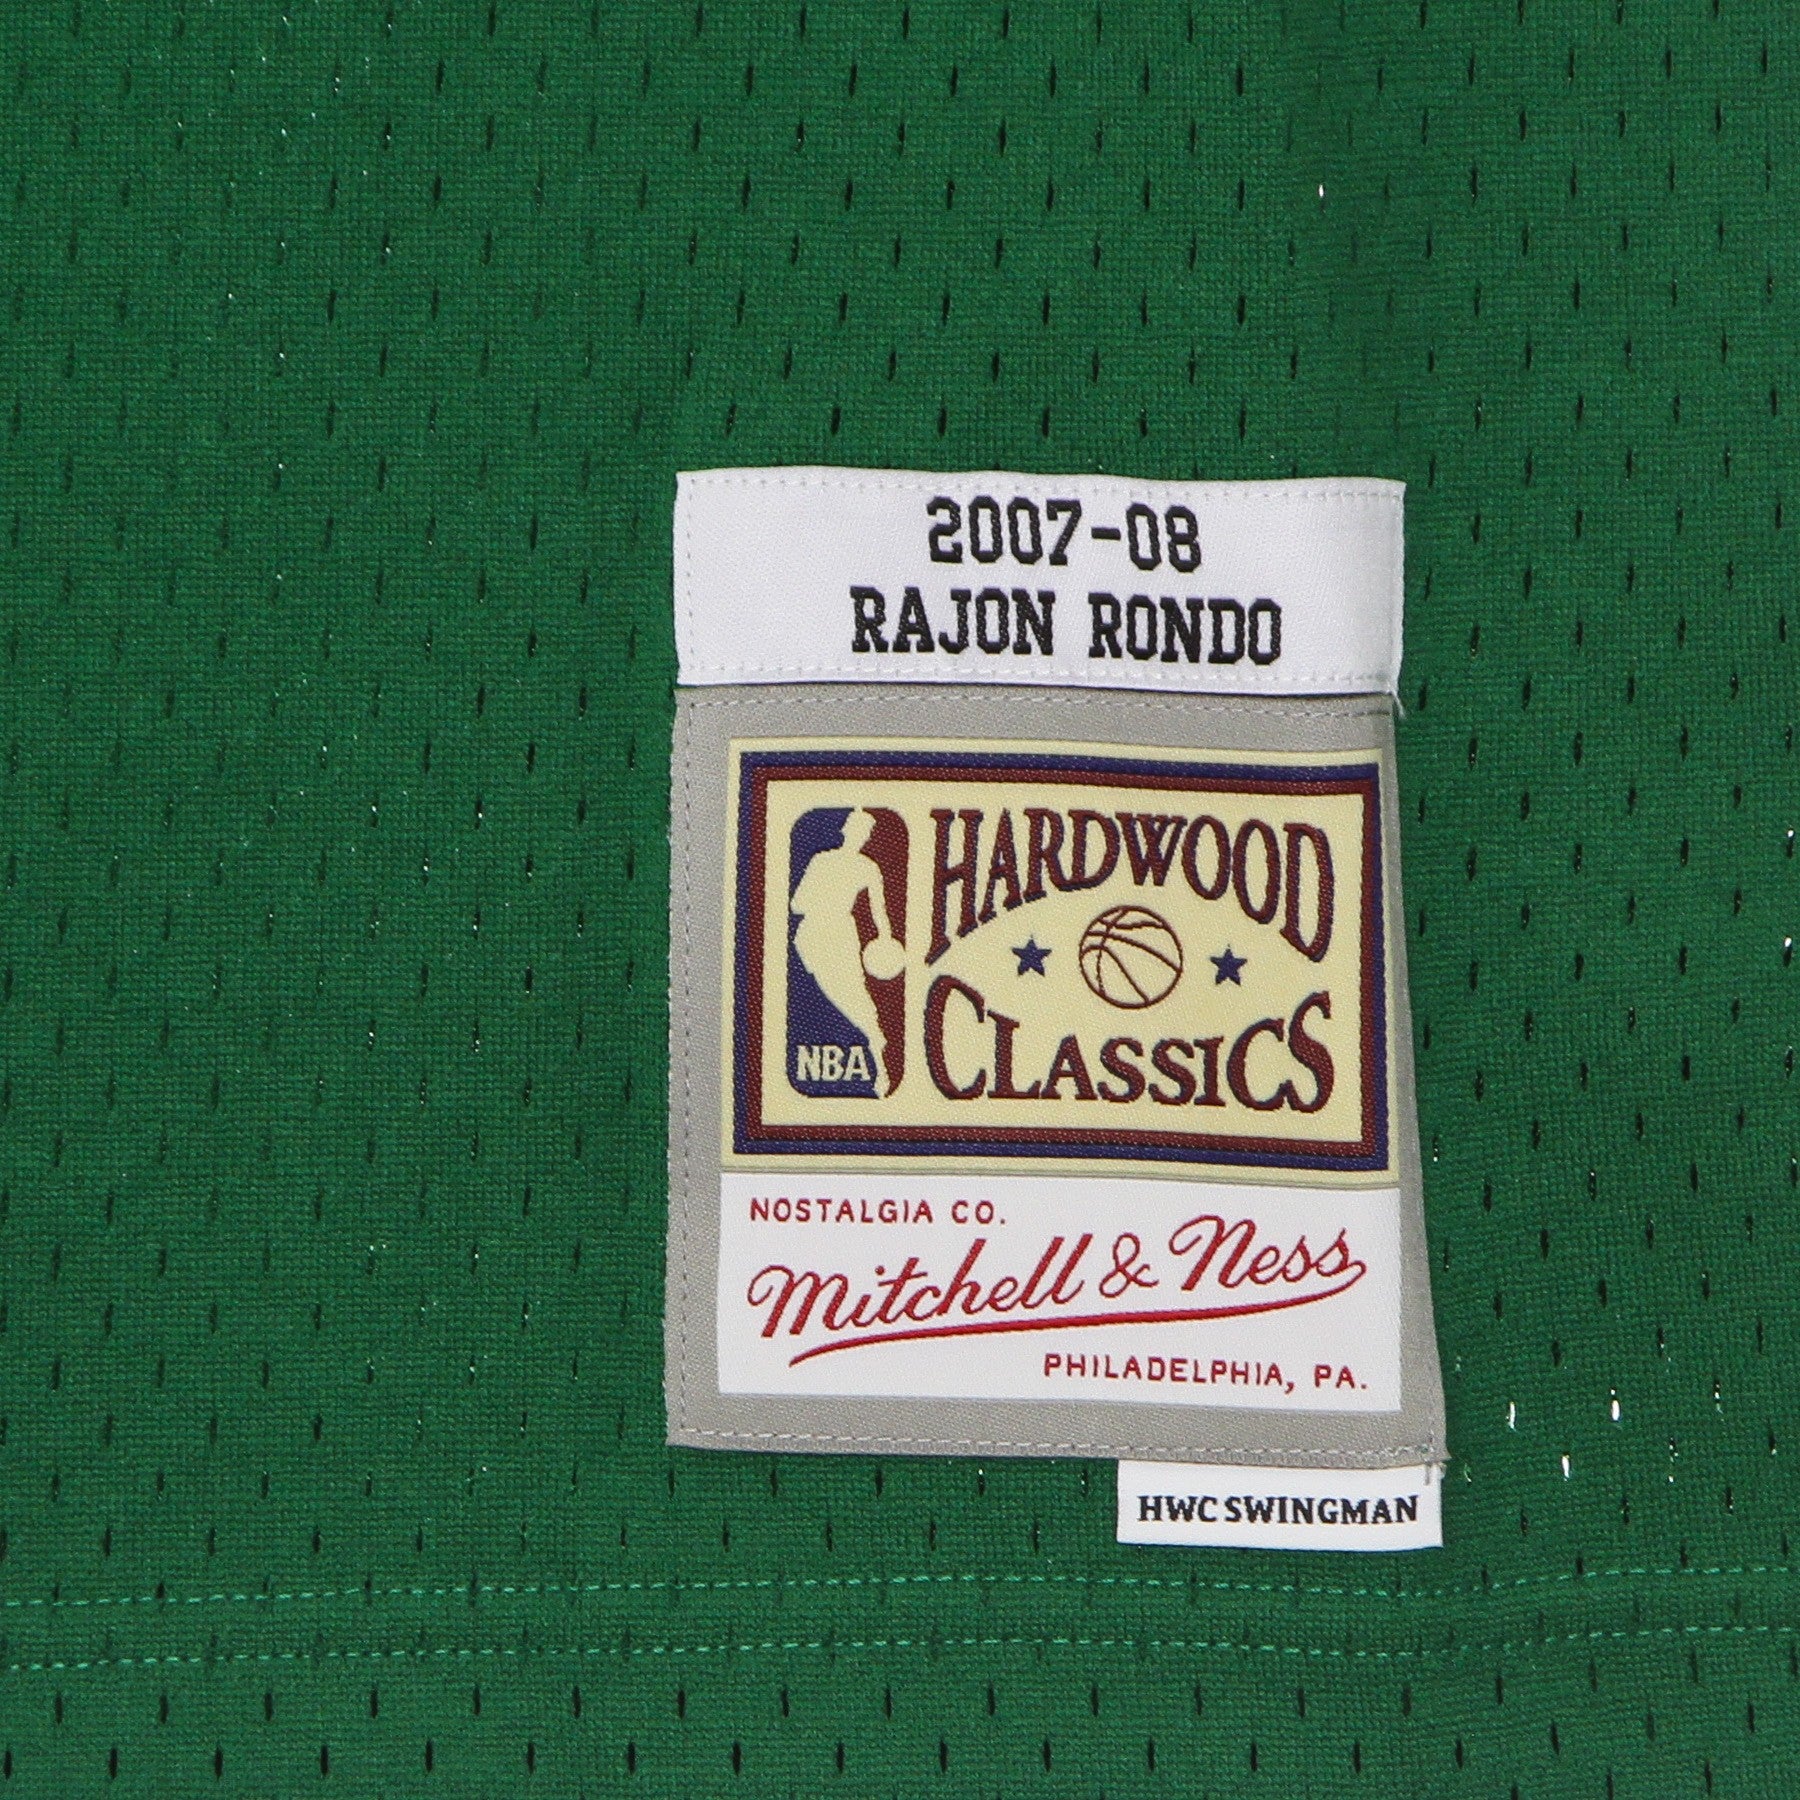 Men's Basketball Tank Top Nba Swingman Jersey Hardwood Classics No 9 Rajon Rondo 2007-08 Boscel Original Team Colors